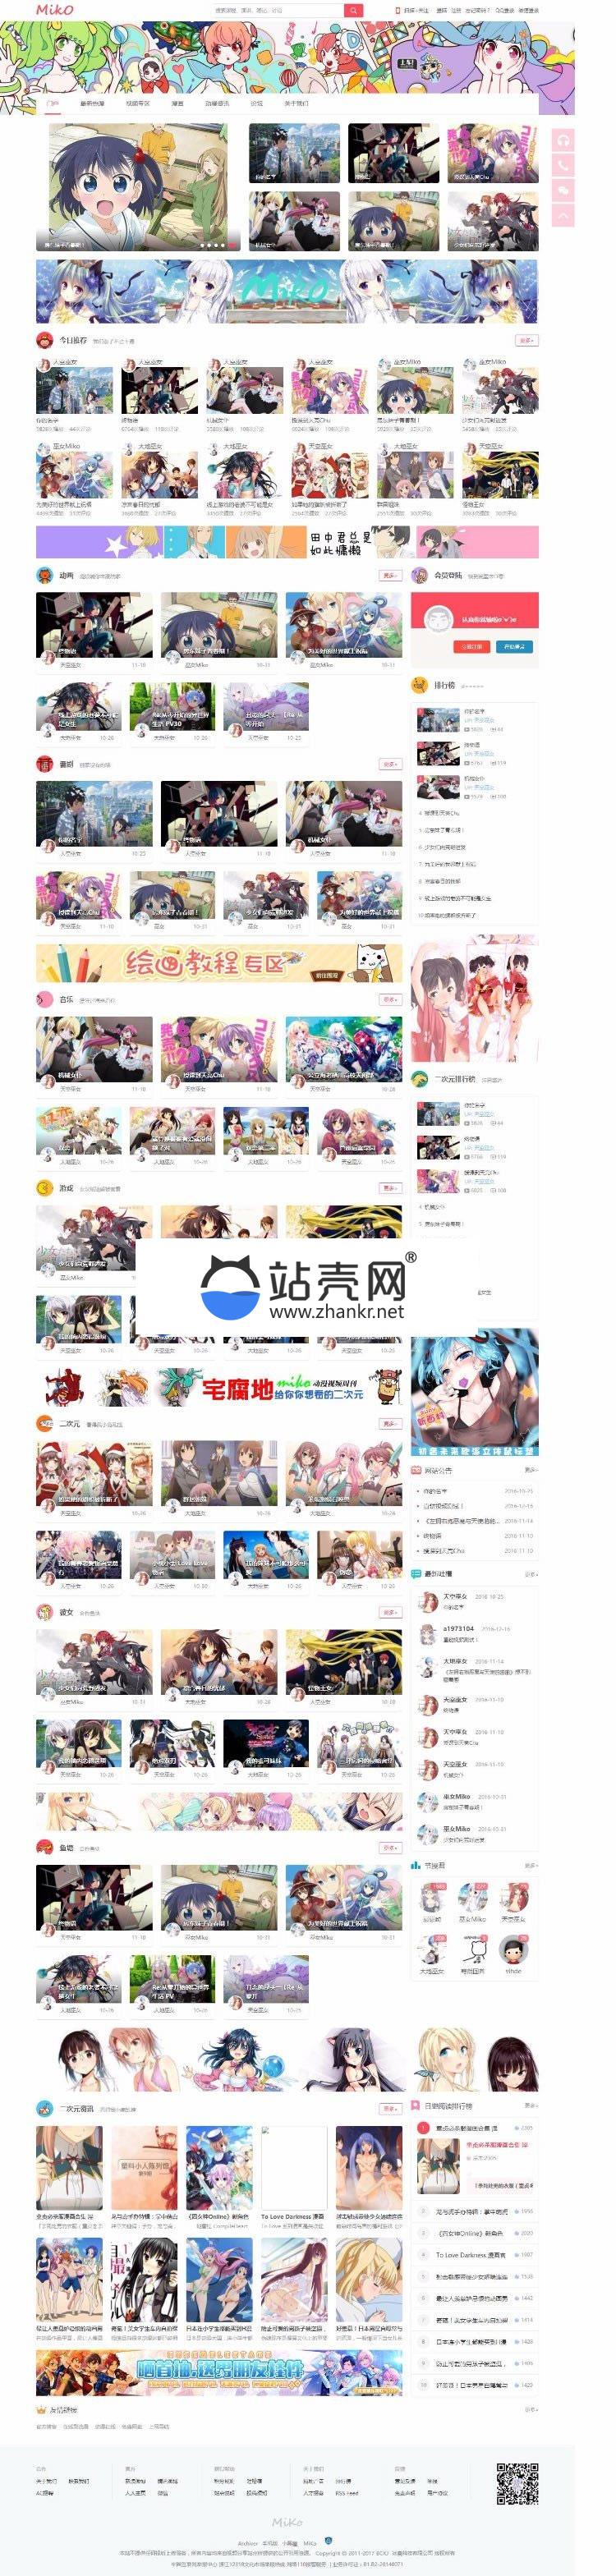 Miko弹幕视频网源码 动漫视频网站模板 Discuz后台_源码下载